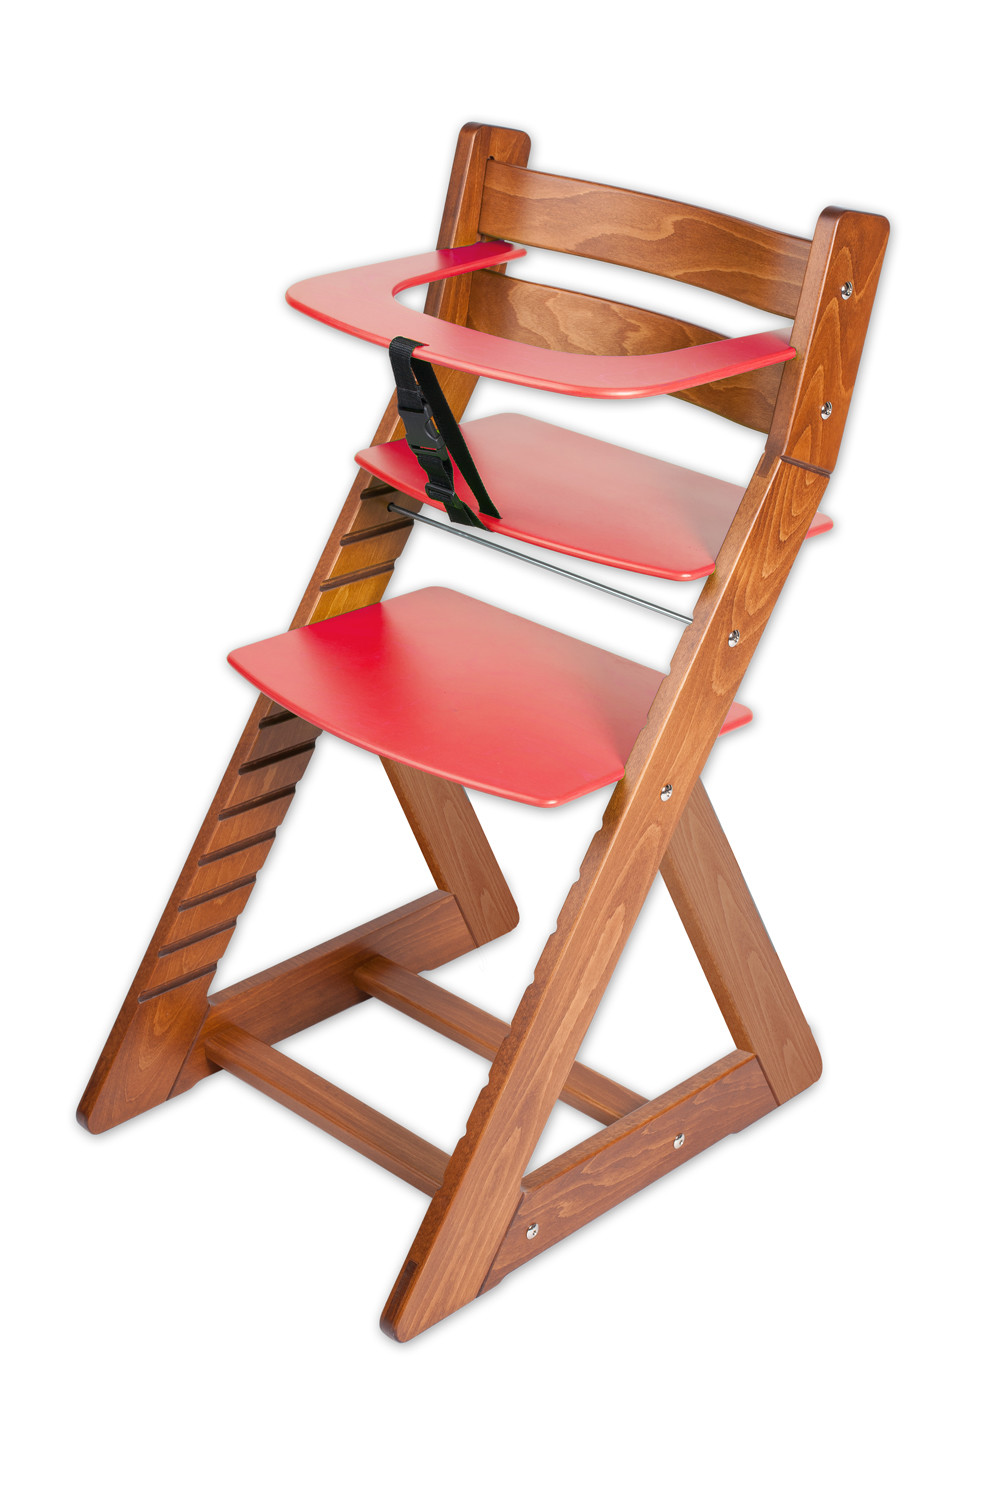 Hajdalánek Rostoucí židle ANETA - malý pultík (dub tmavý, červená)